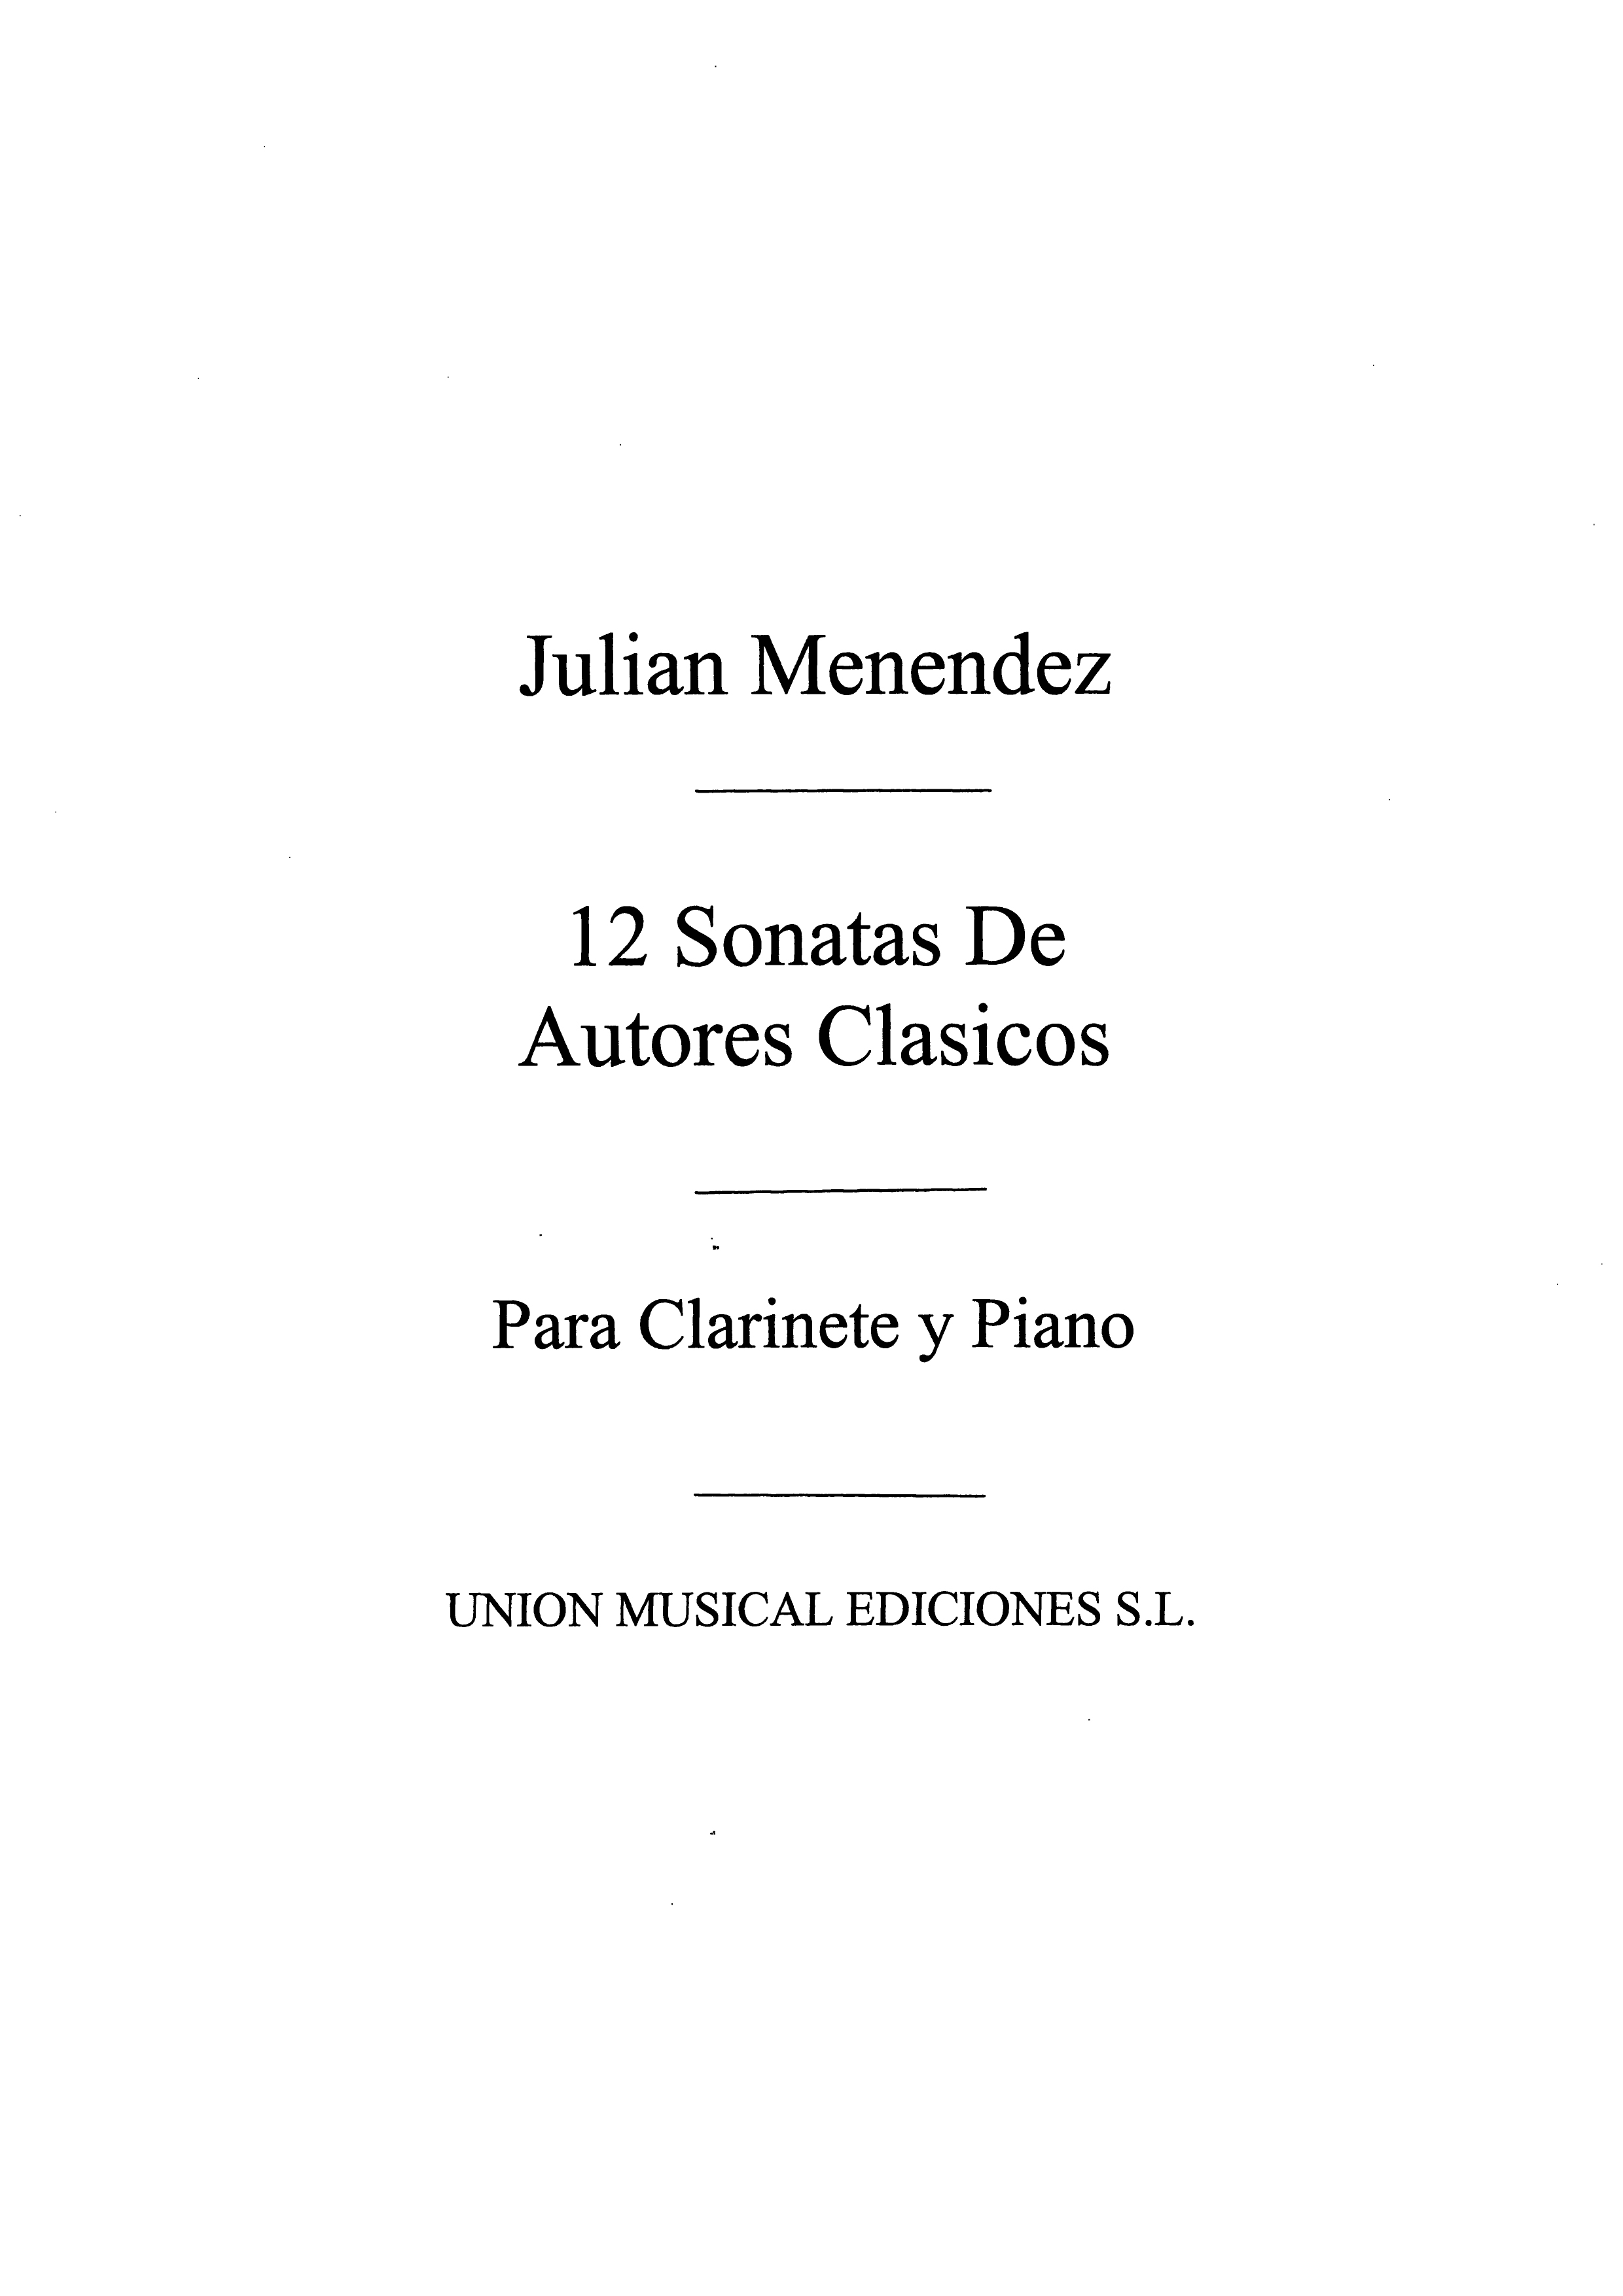 Julian Menndez: Doce Sonatas De Autores Clasicos.Cuad. I: Clarinet: